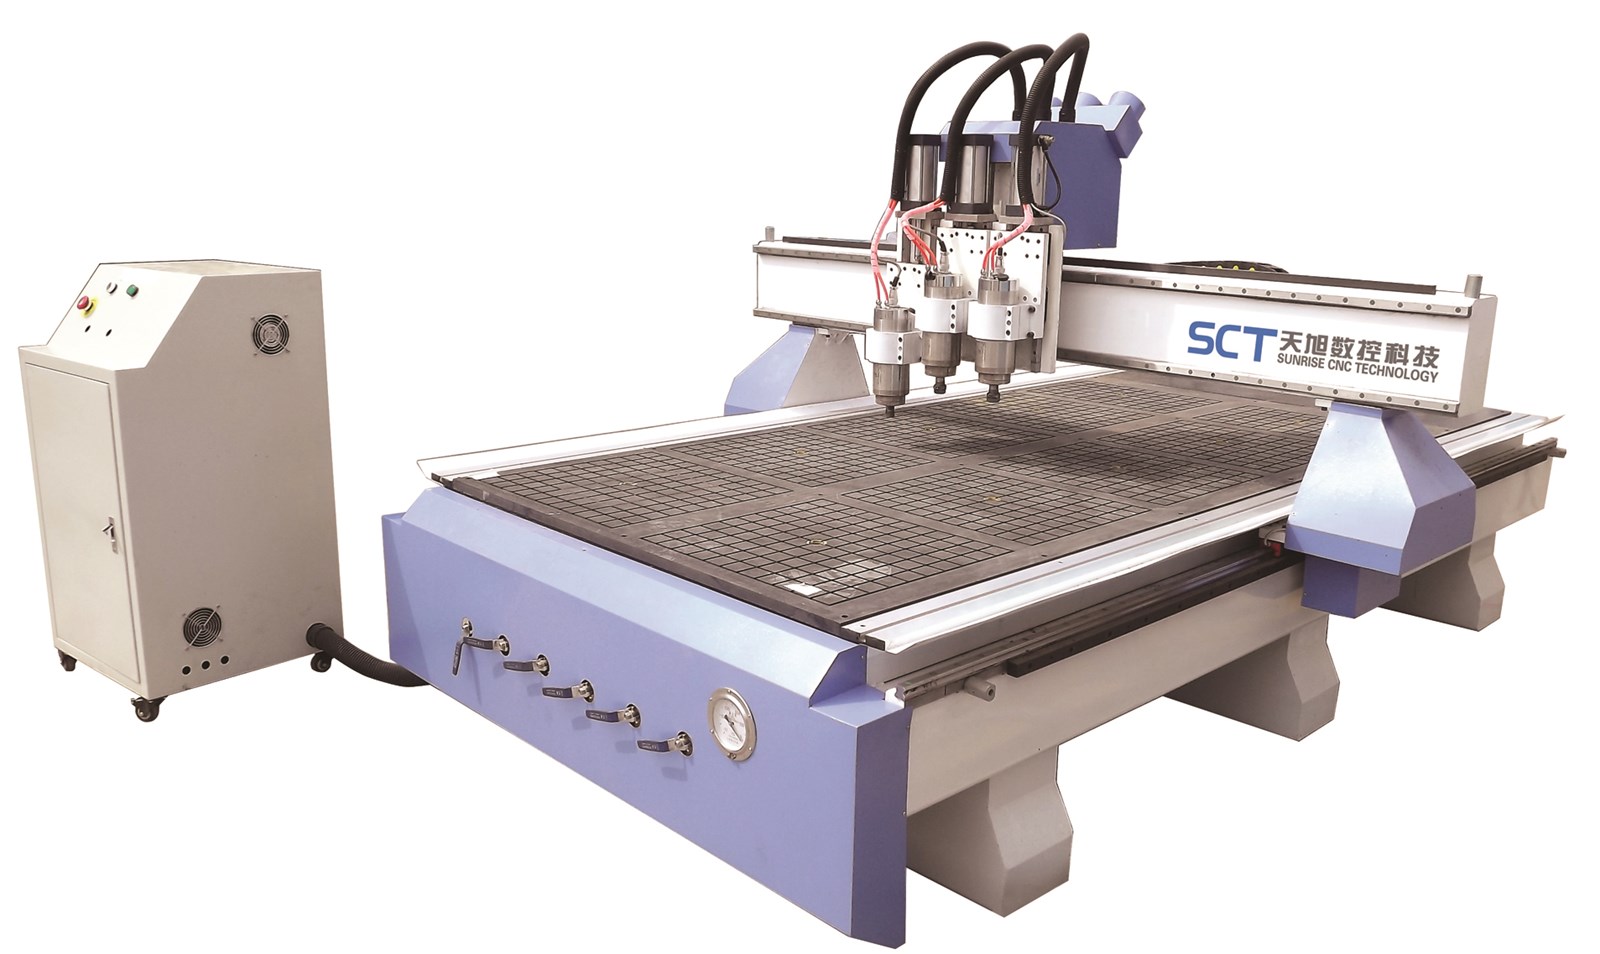 SCTPH1325 Pneumatic Tool Change wood CNC Router